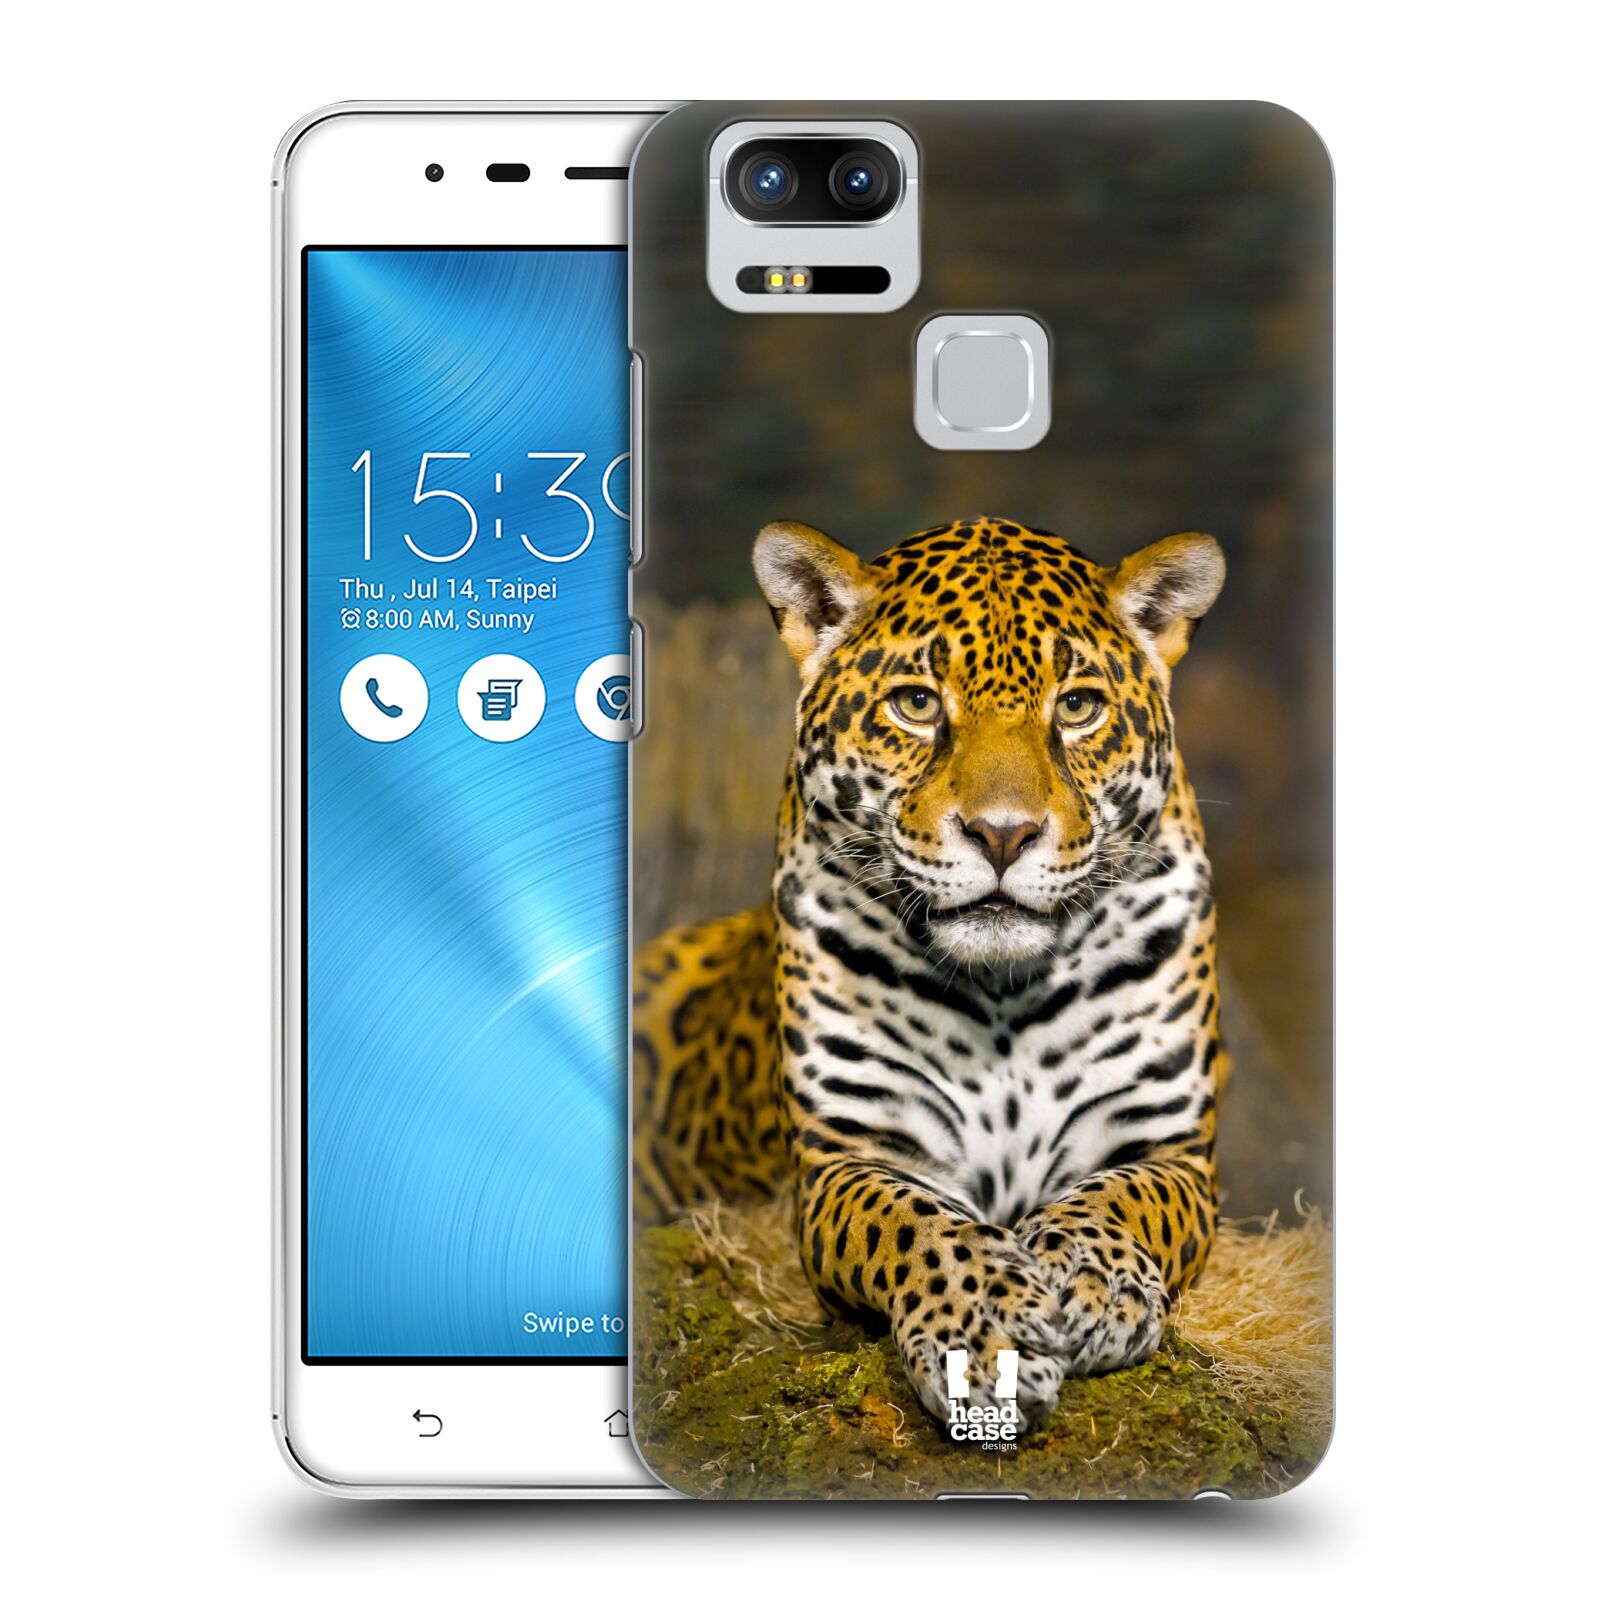 HEAD CASE plastový obal na mobil Asus Zenfone 3 Zoom ZE553KL vzor slavná zvířata foto jaguár